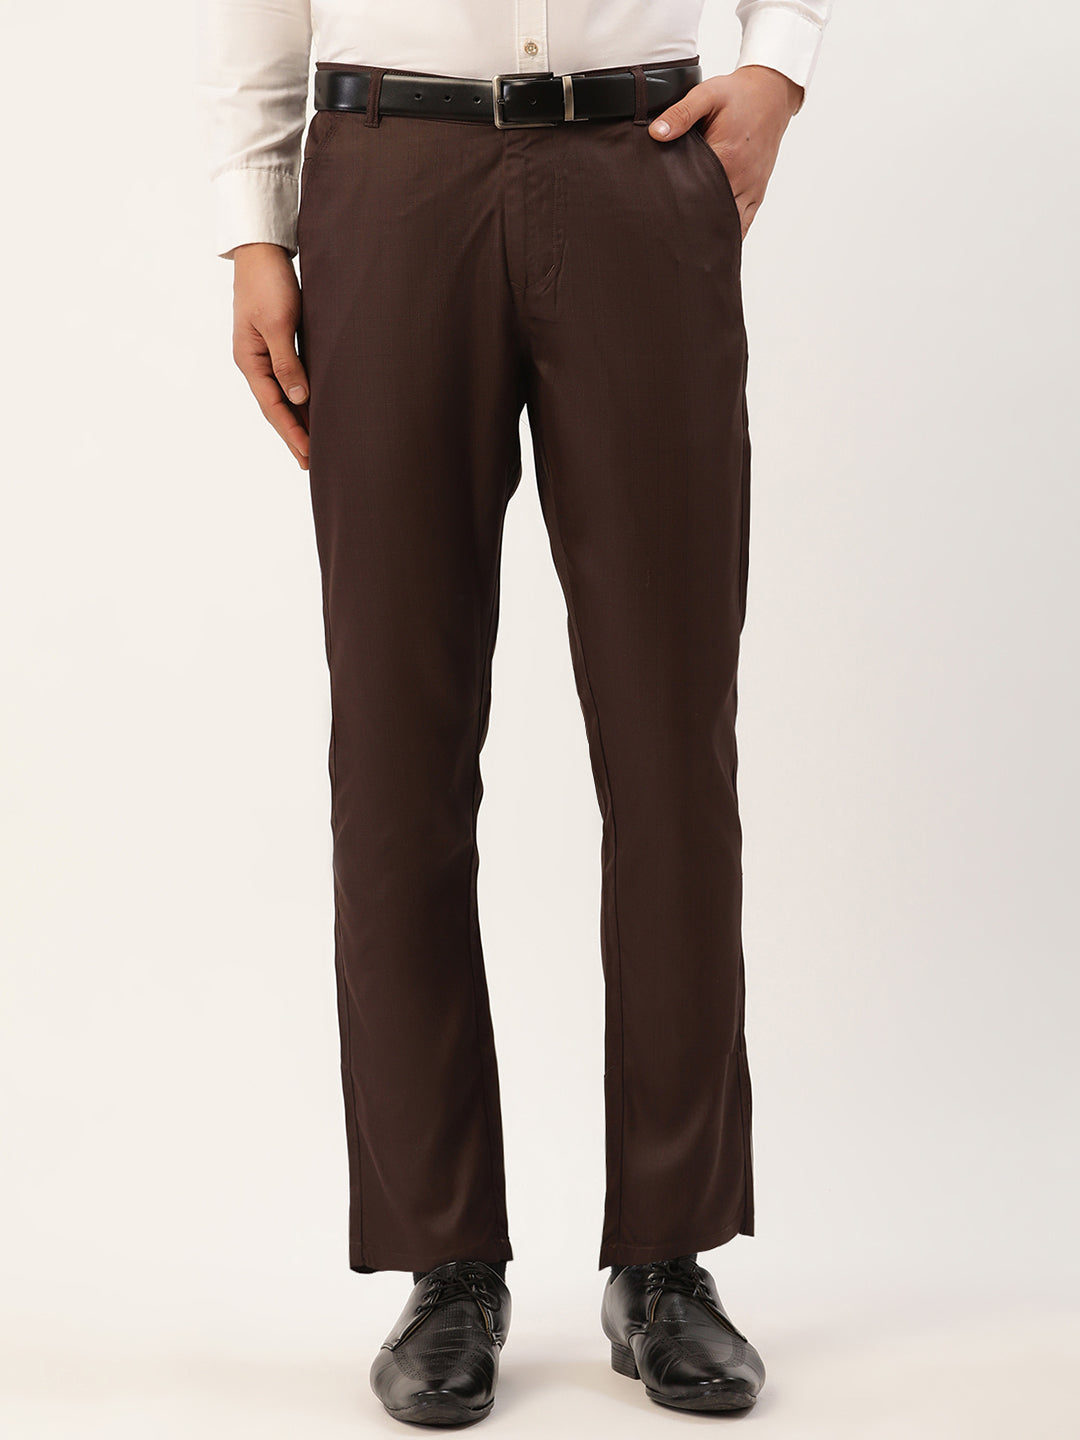 Ready Stock Malaysia Plus size short Pant *Waist 42 to 44 inch/ 106-111cm  大码短裤| Shopee Malaysia